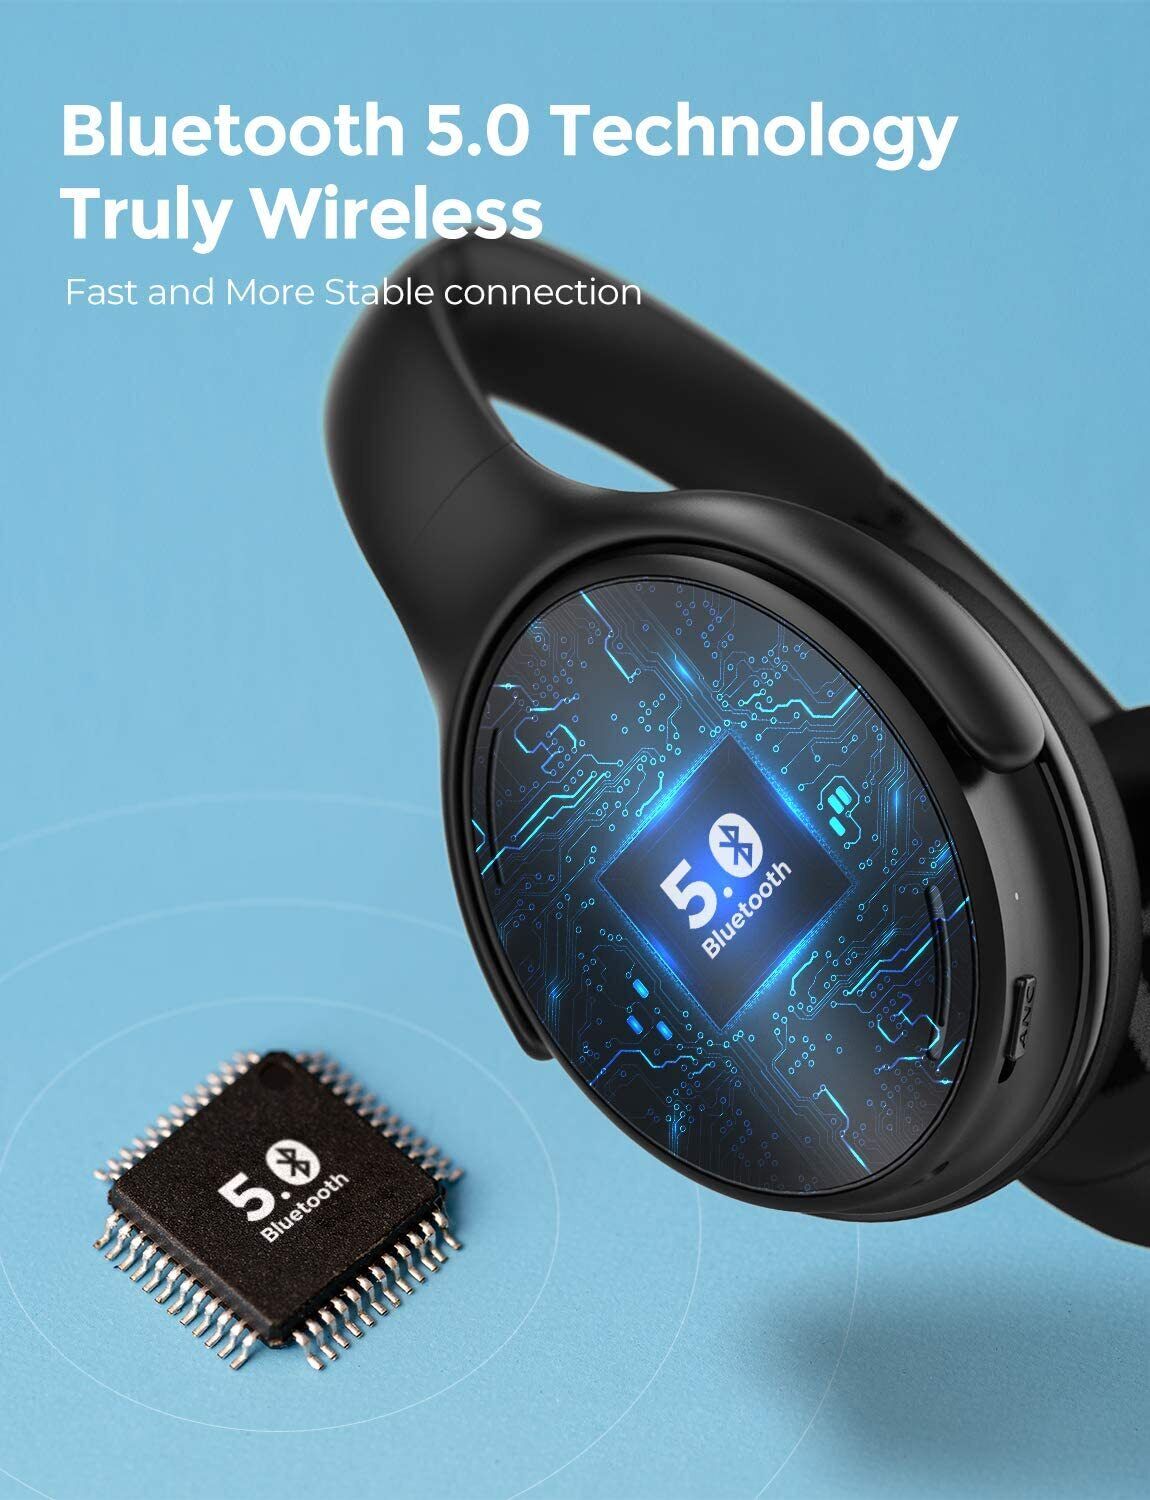 Mpow H19 Bluetooth Hi-Fi Kopfhörer Headset Musik Stereo Headphones Over Ear